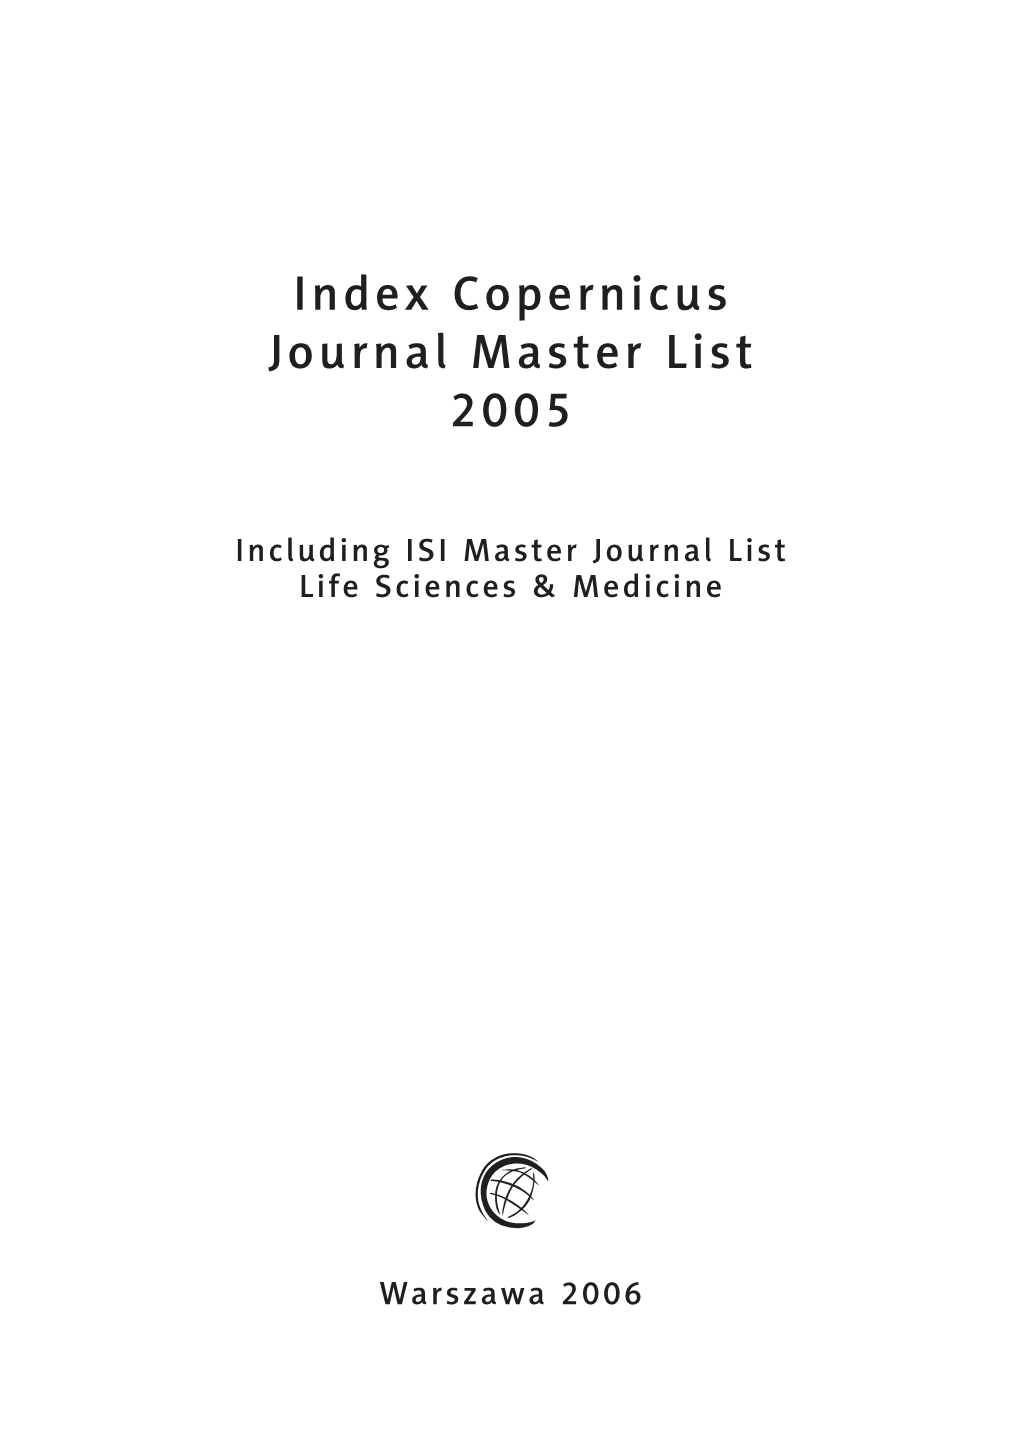 IC Journal Master List 2005